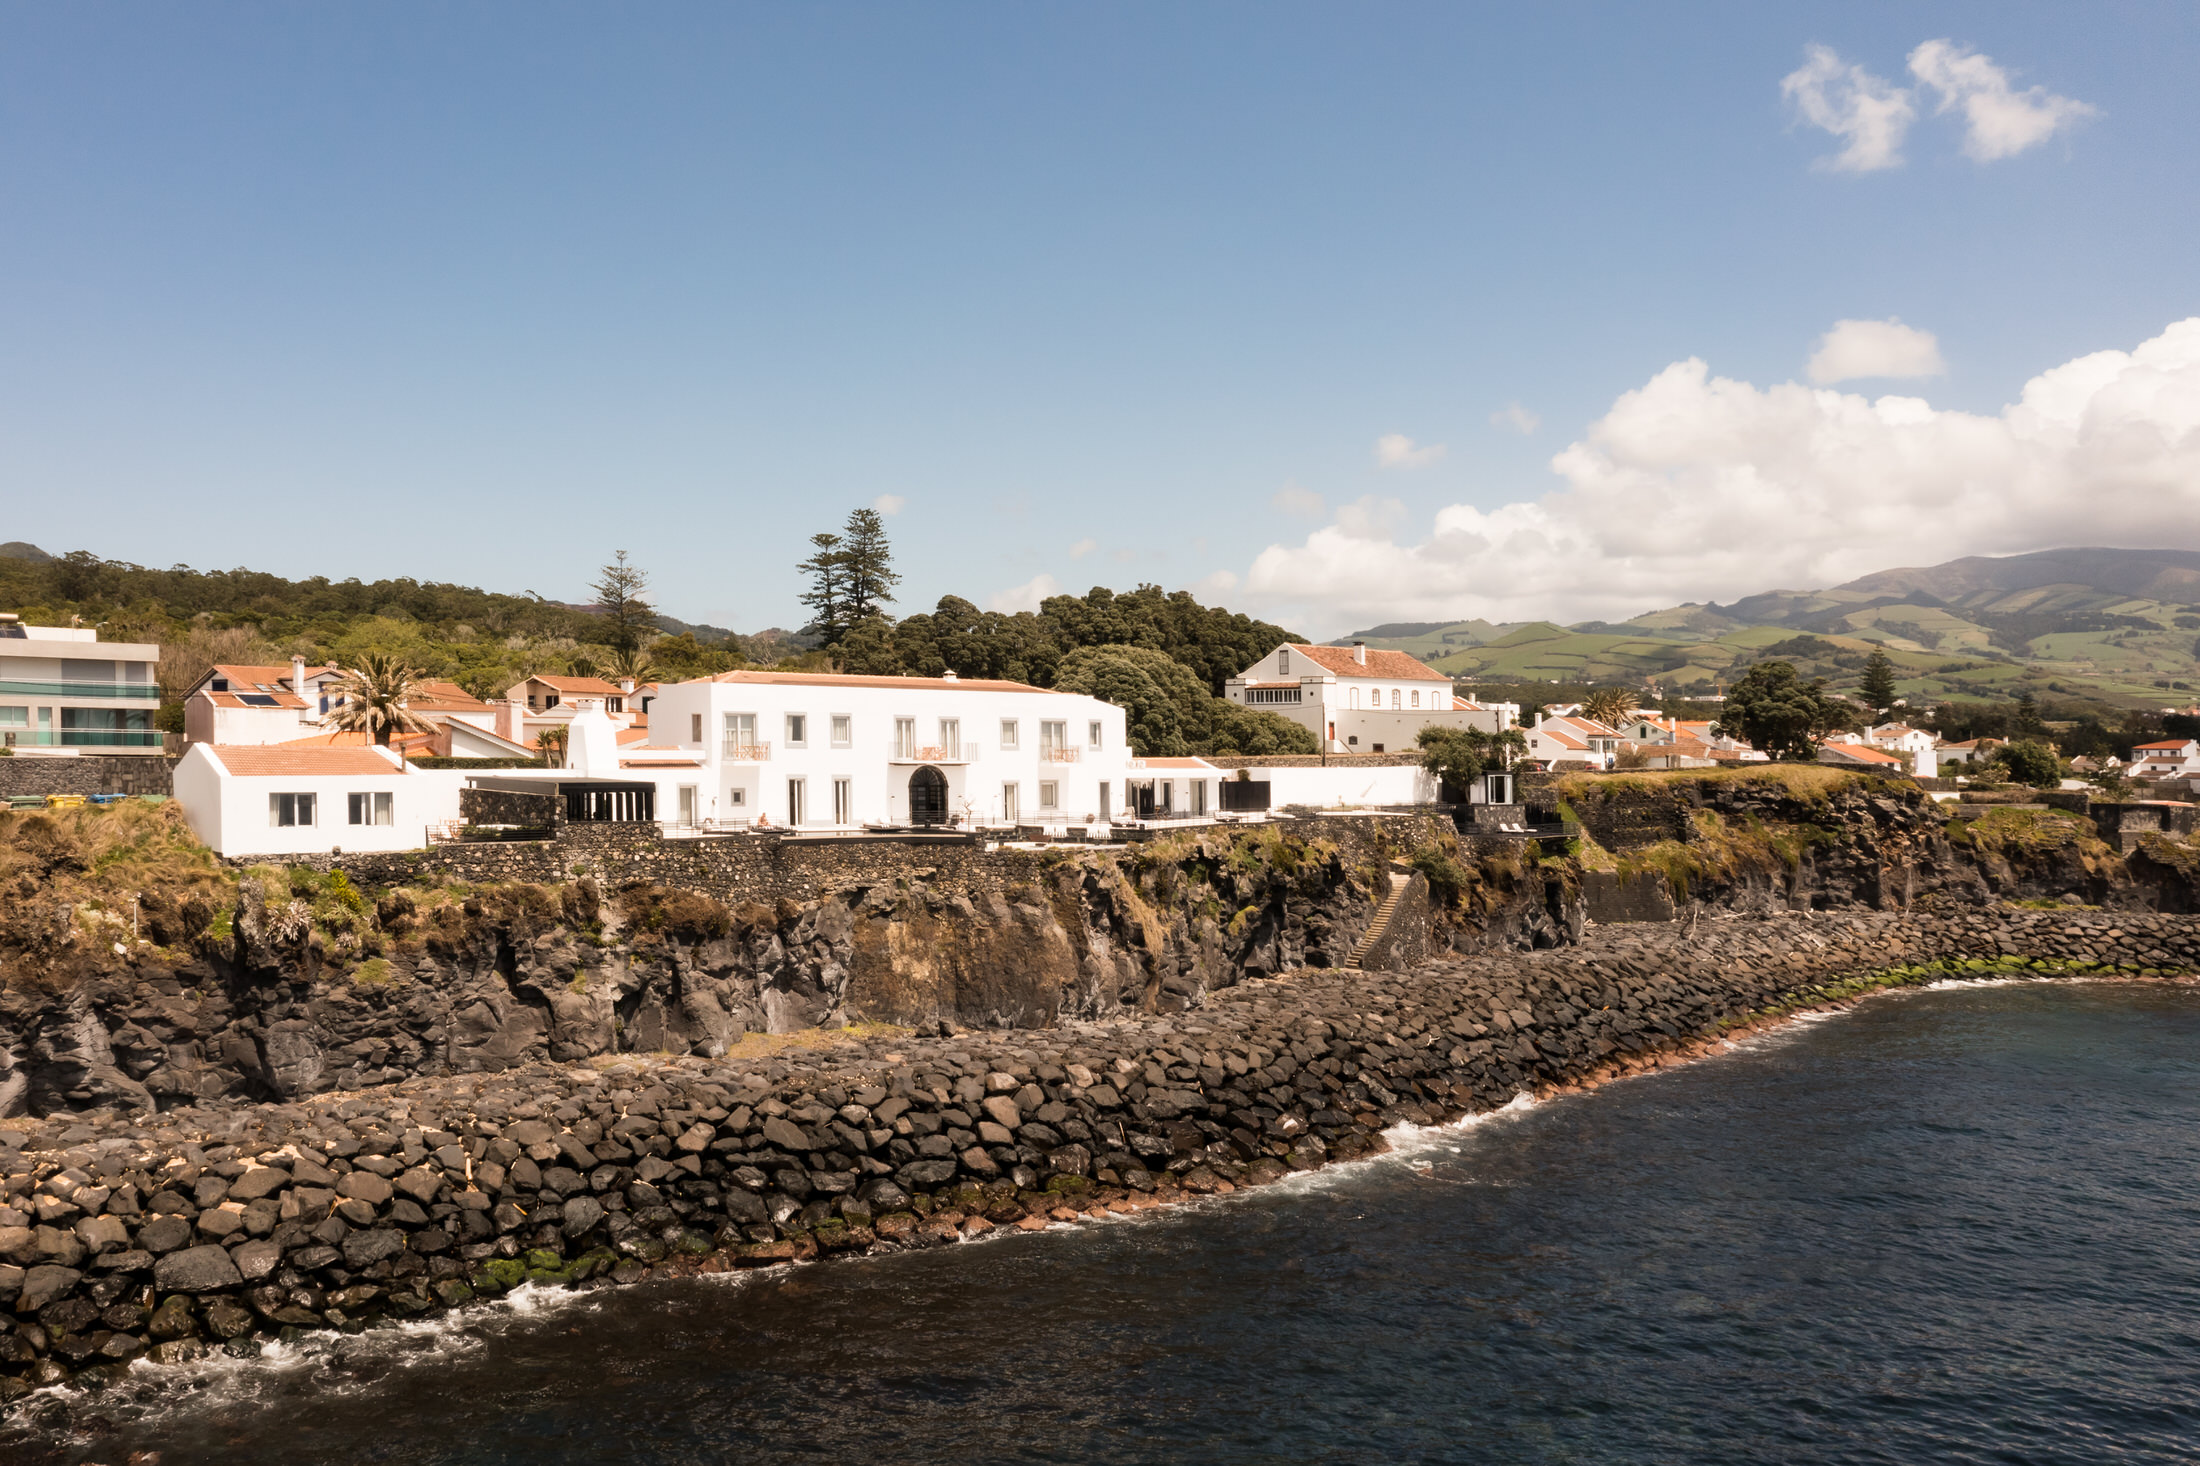 Quiet Studios White Hotel Sao Miguel Island Photo Francisco Nogueira Yellowtrace 43